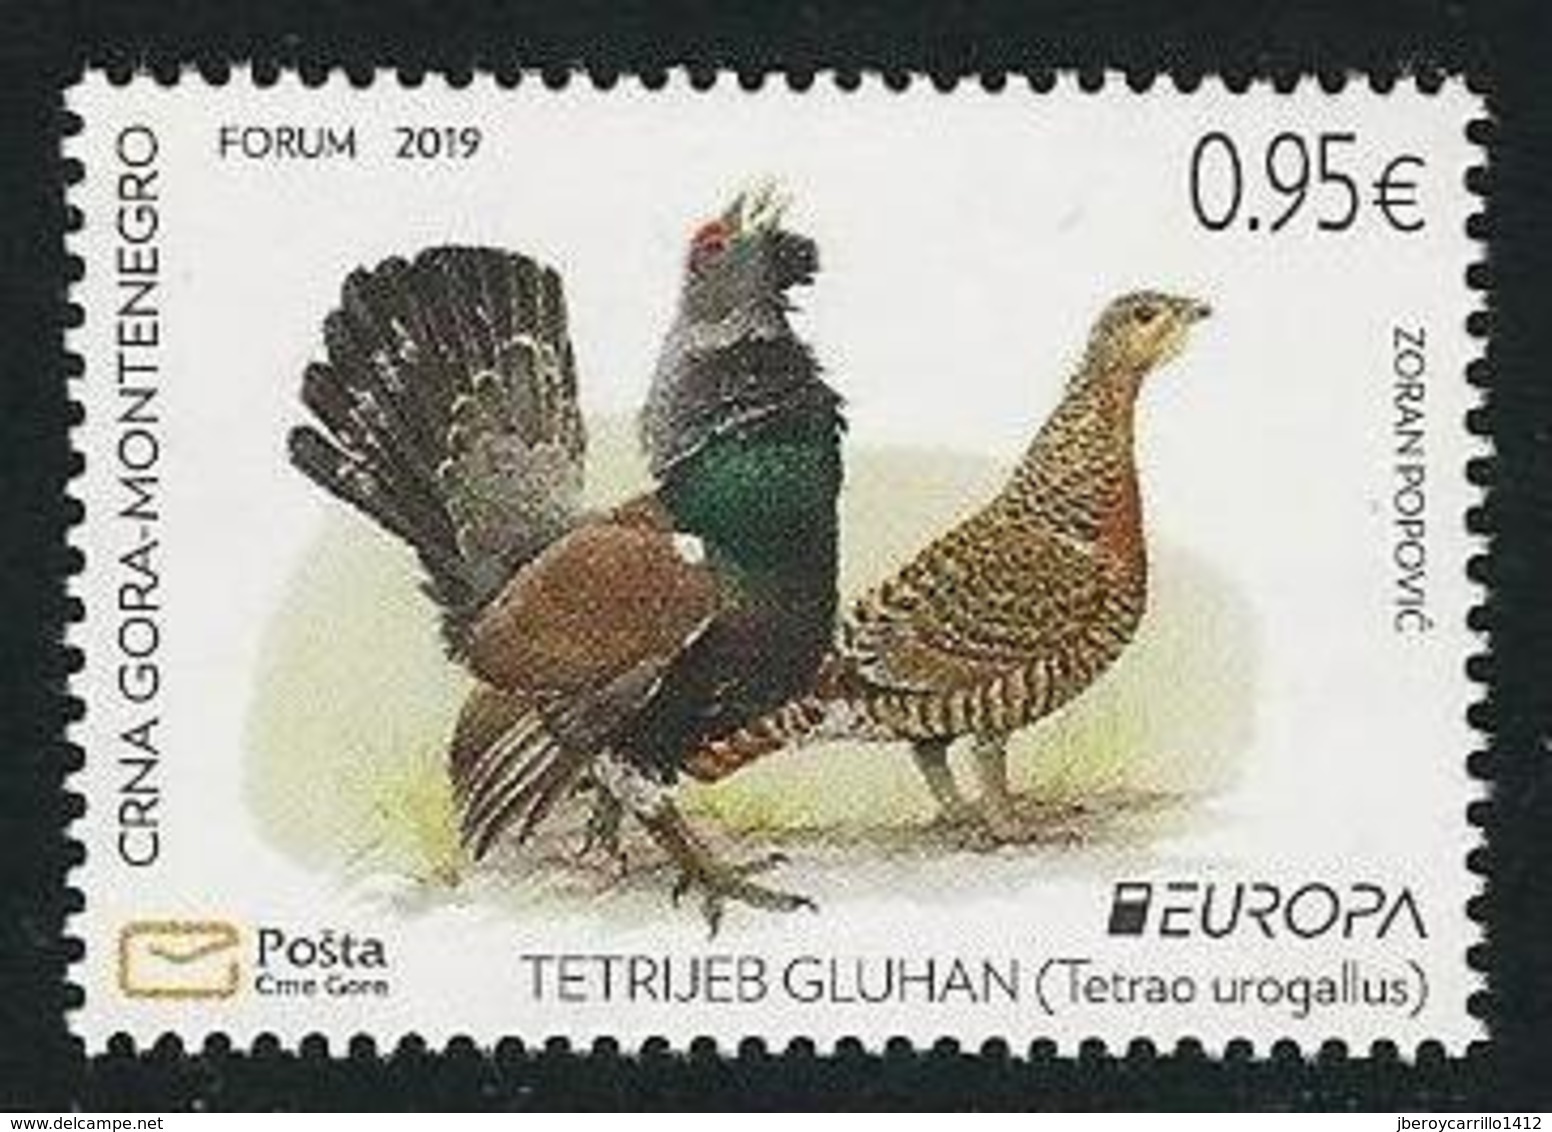 MONTENEGRO / CRNA GORA  - EUROPA 2019 -NATIONAL BIRDS.-"AVES -BIRDS -VÖGEL-OISEAUX"- SERIE  N - 2019